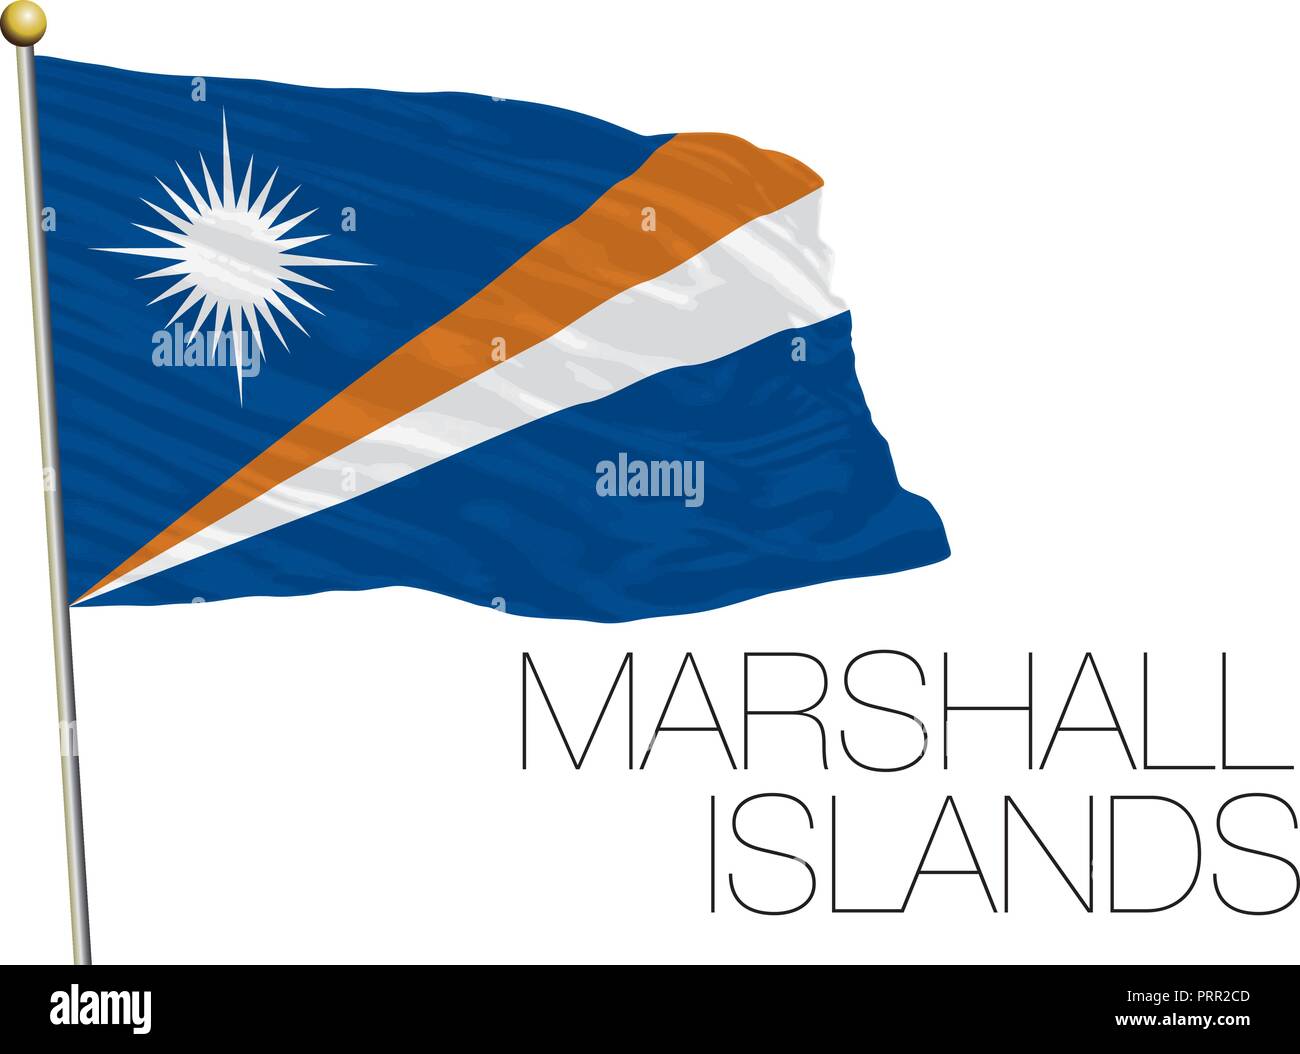 Marshall Islands official flag, vector illustration Stock Vector